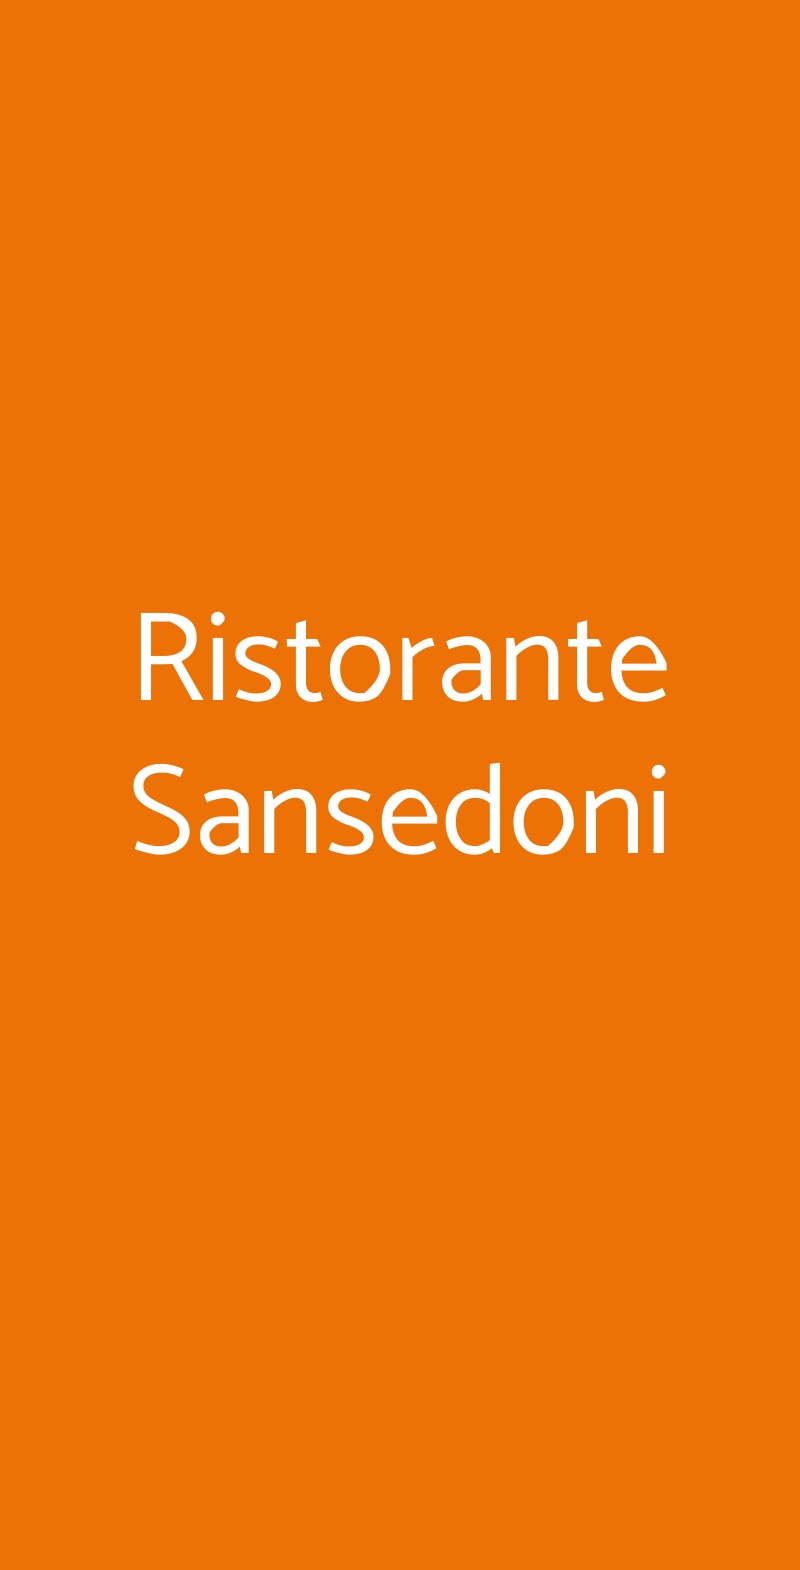 Ristorante Sansedoni Siena menù 1 pagina